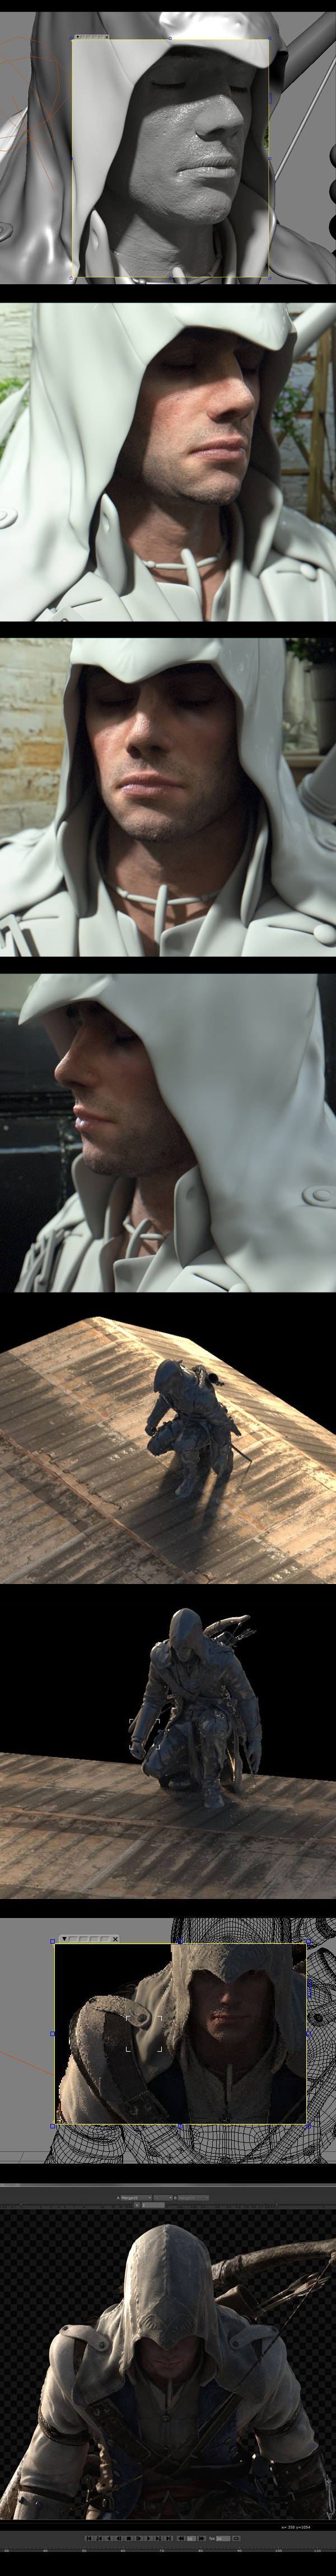 assassin ubisoft 3D CGI shading SKIN SHADING Render nuke softimage compositing lighting texturing